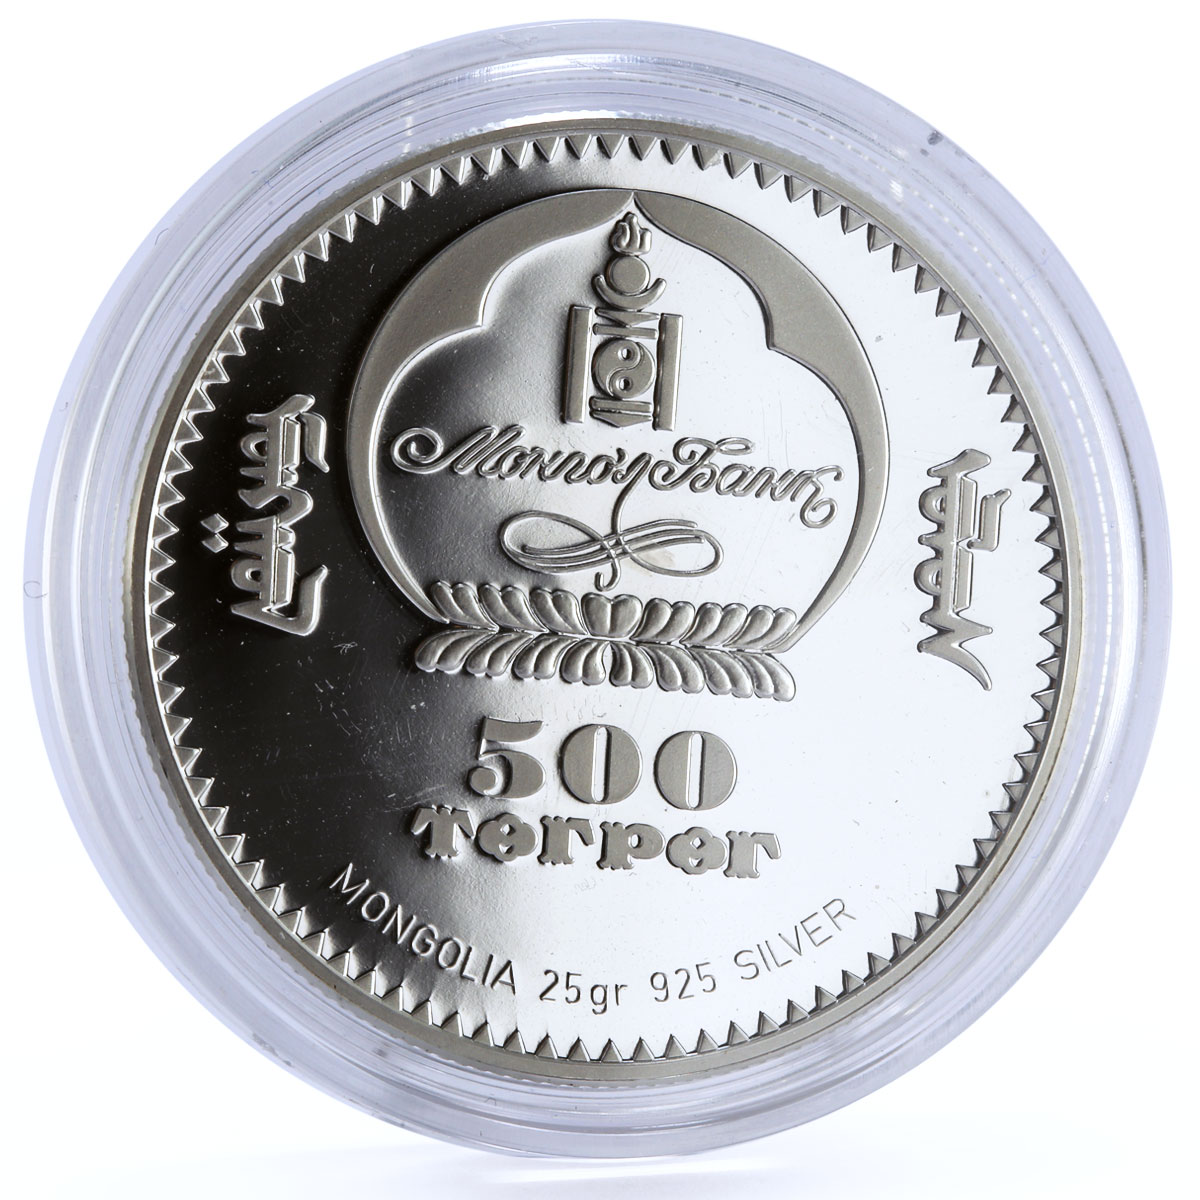 Mongolia 500 togrog Wildlife Protection series Gobi Bear proof silver coin 2006